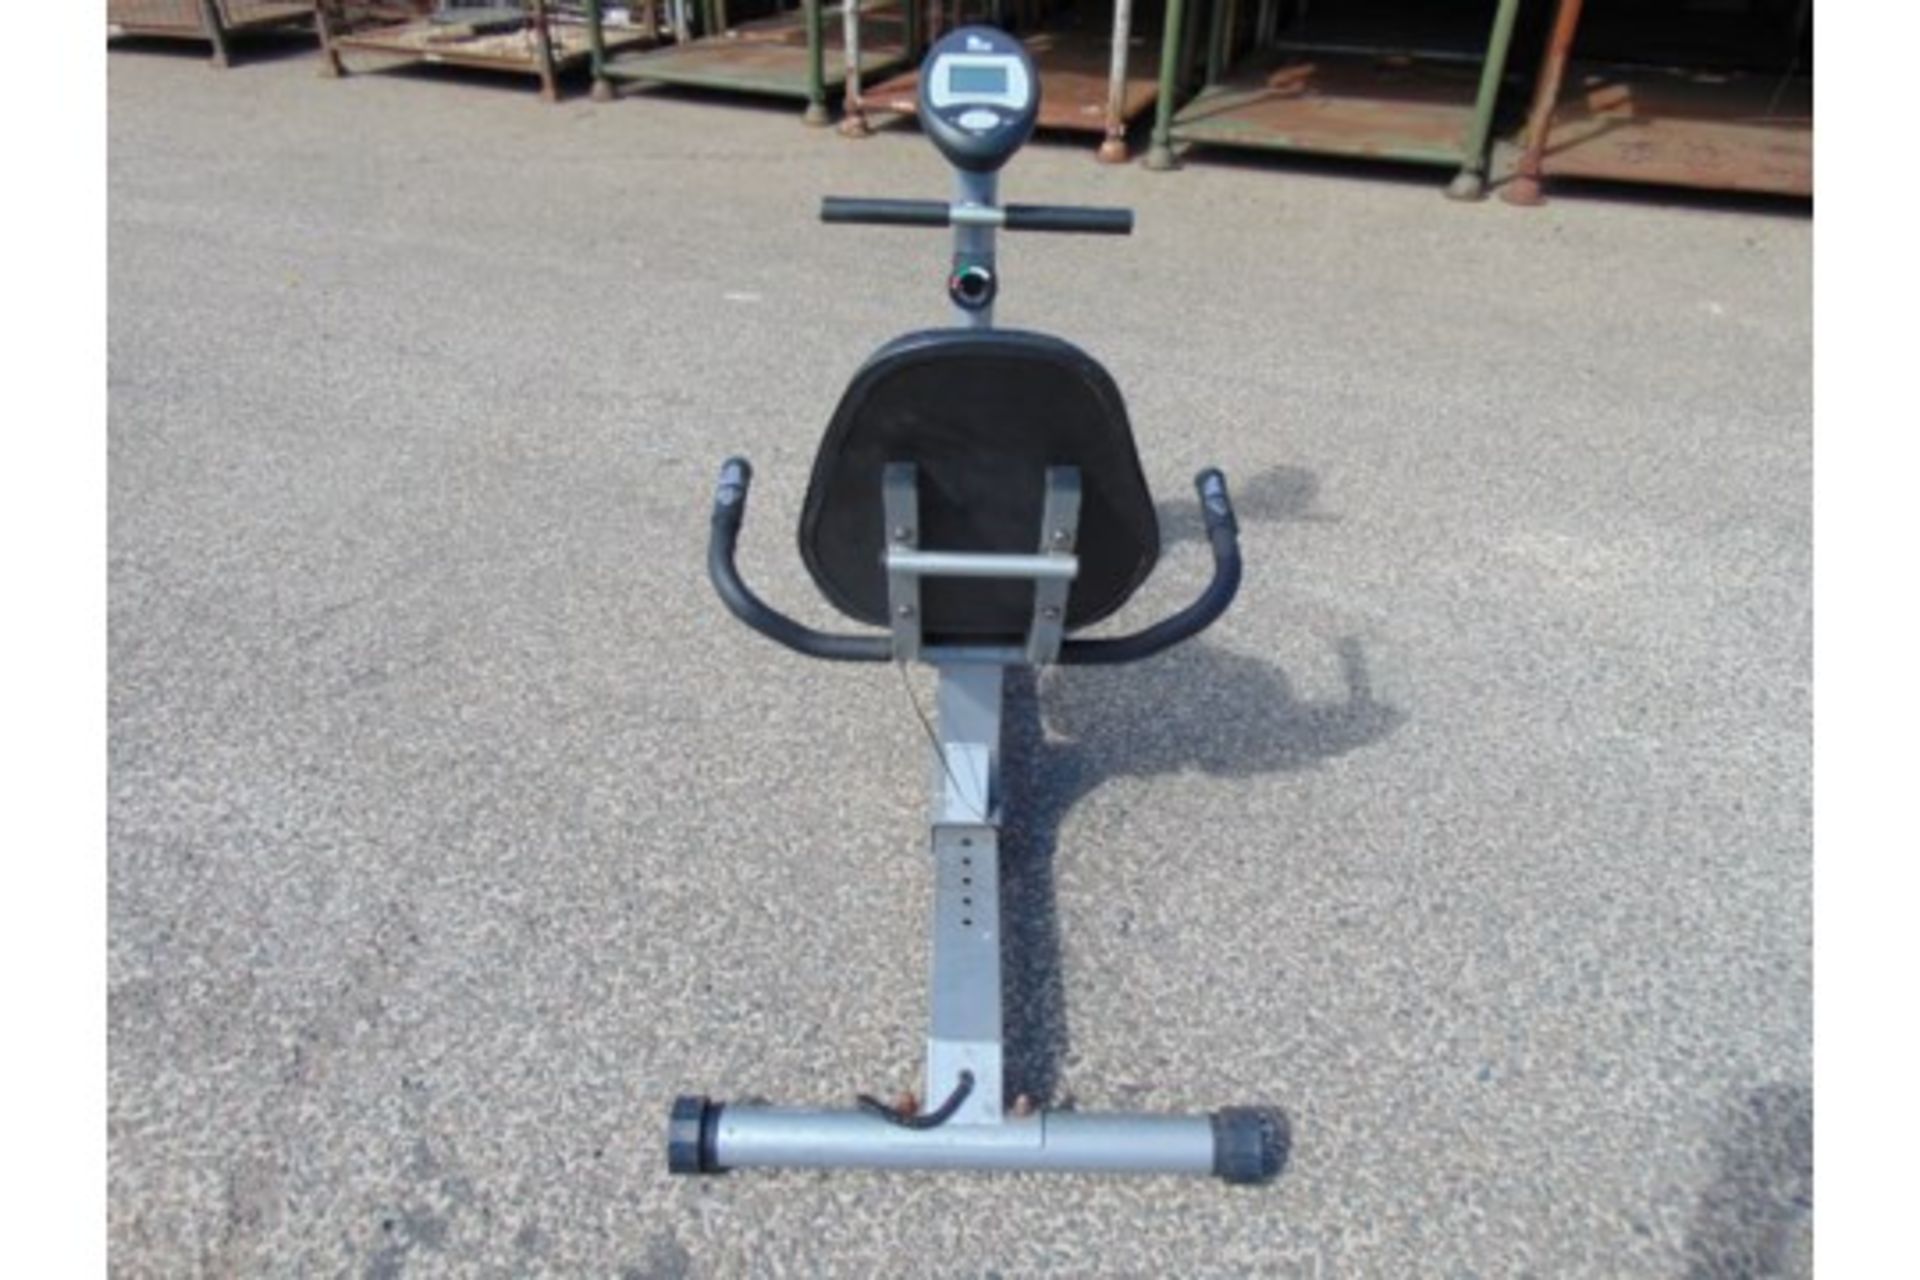 Carl Lewis EMR17 Magnetic Recumbent Exercise Bike - Image 4 of 9